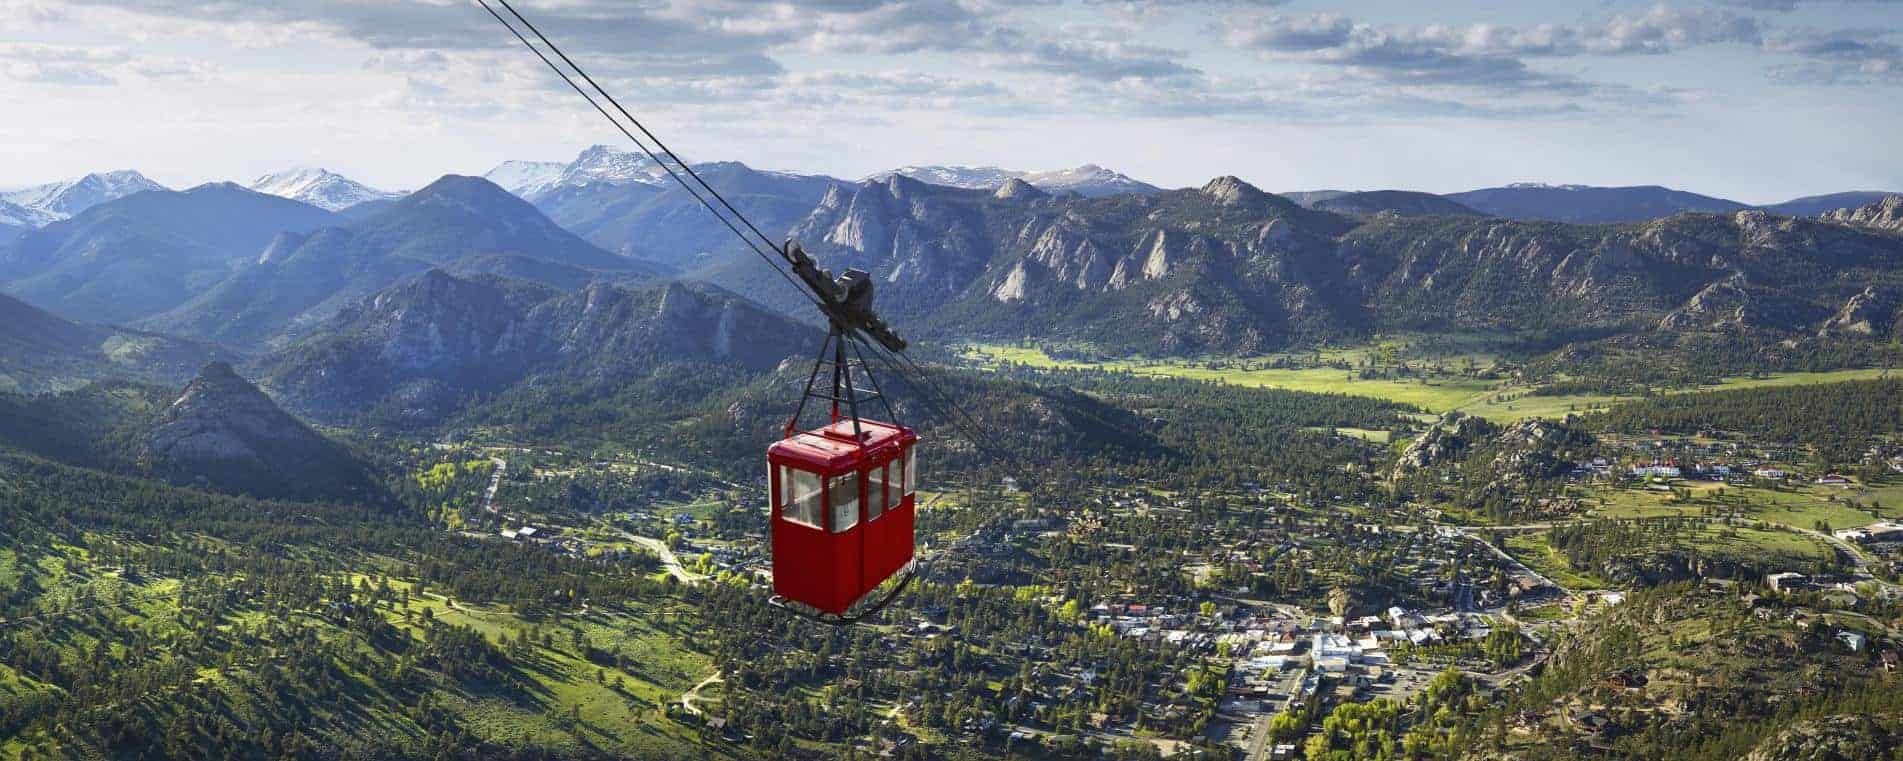 Estes Park Aerial Tram Offers an Exciting Adventure 1